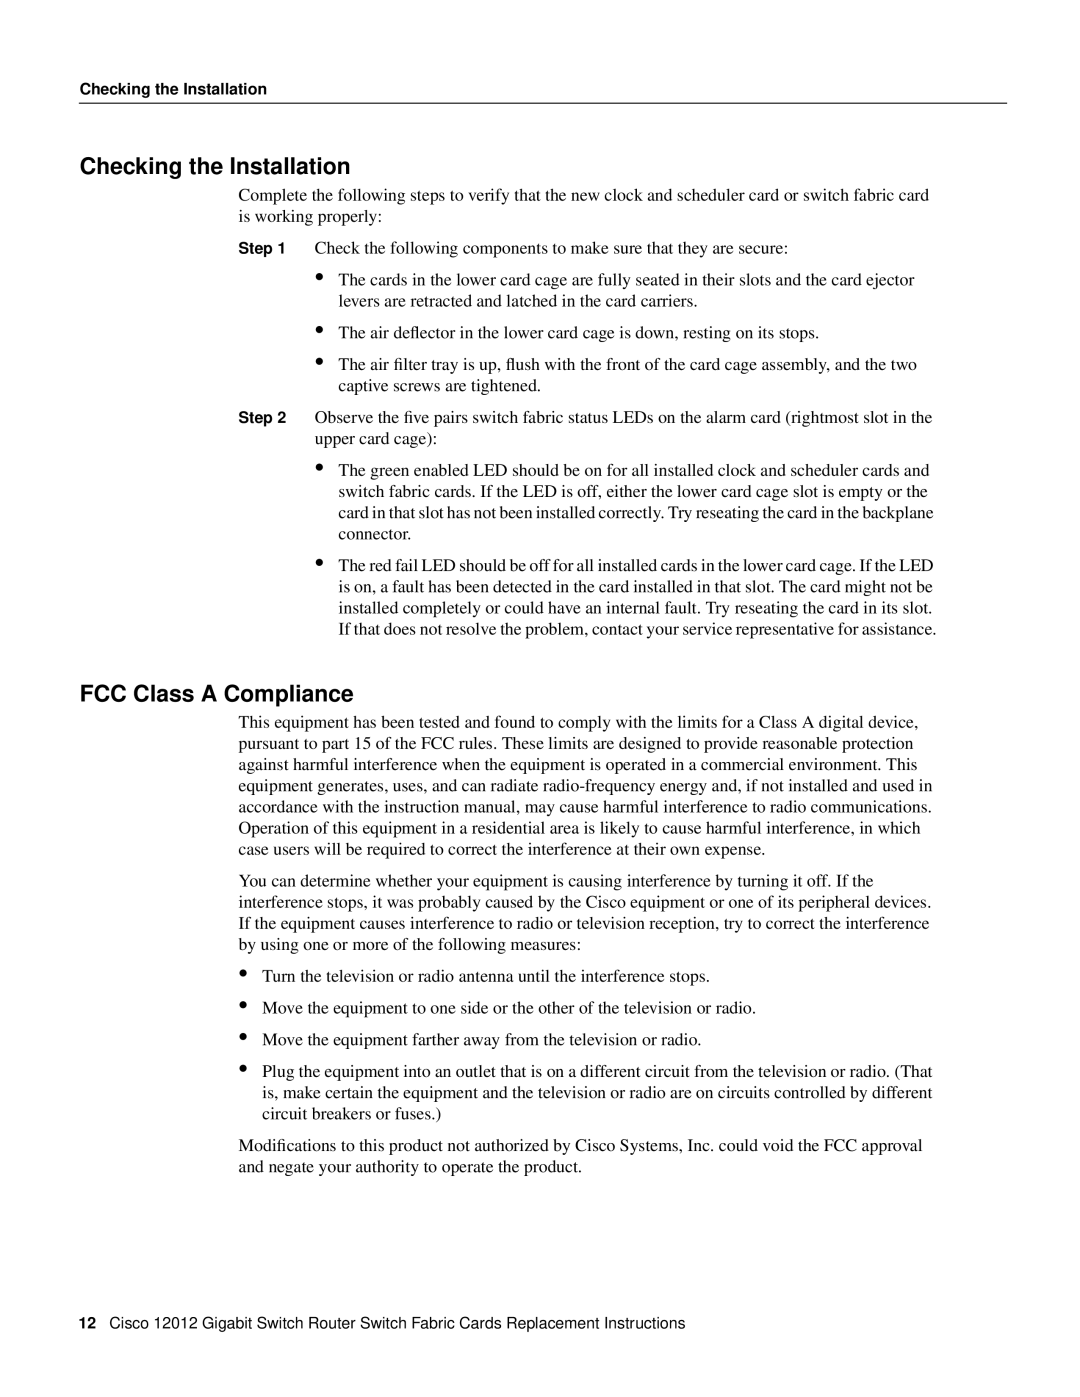 Cisco Systems GSR12-CSC=, GSR12-SFC= manual Checking the Installation, FCC Class A Compliance 